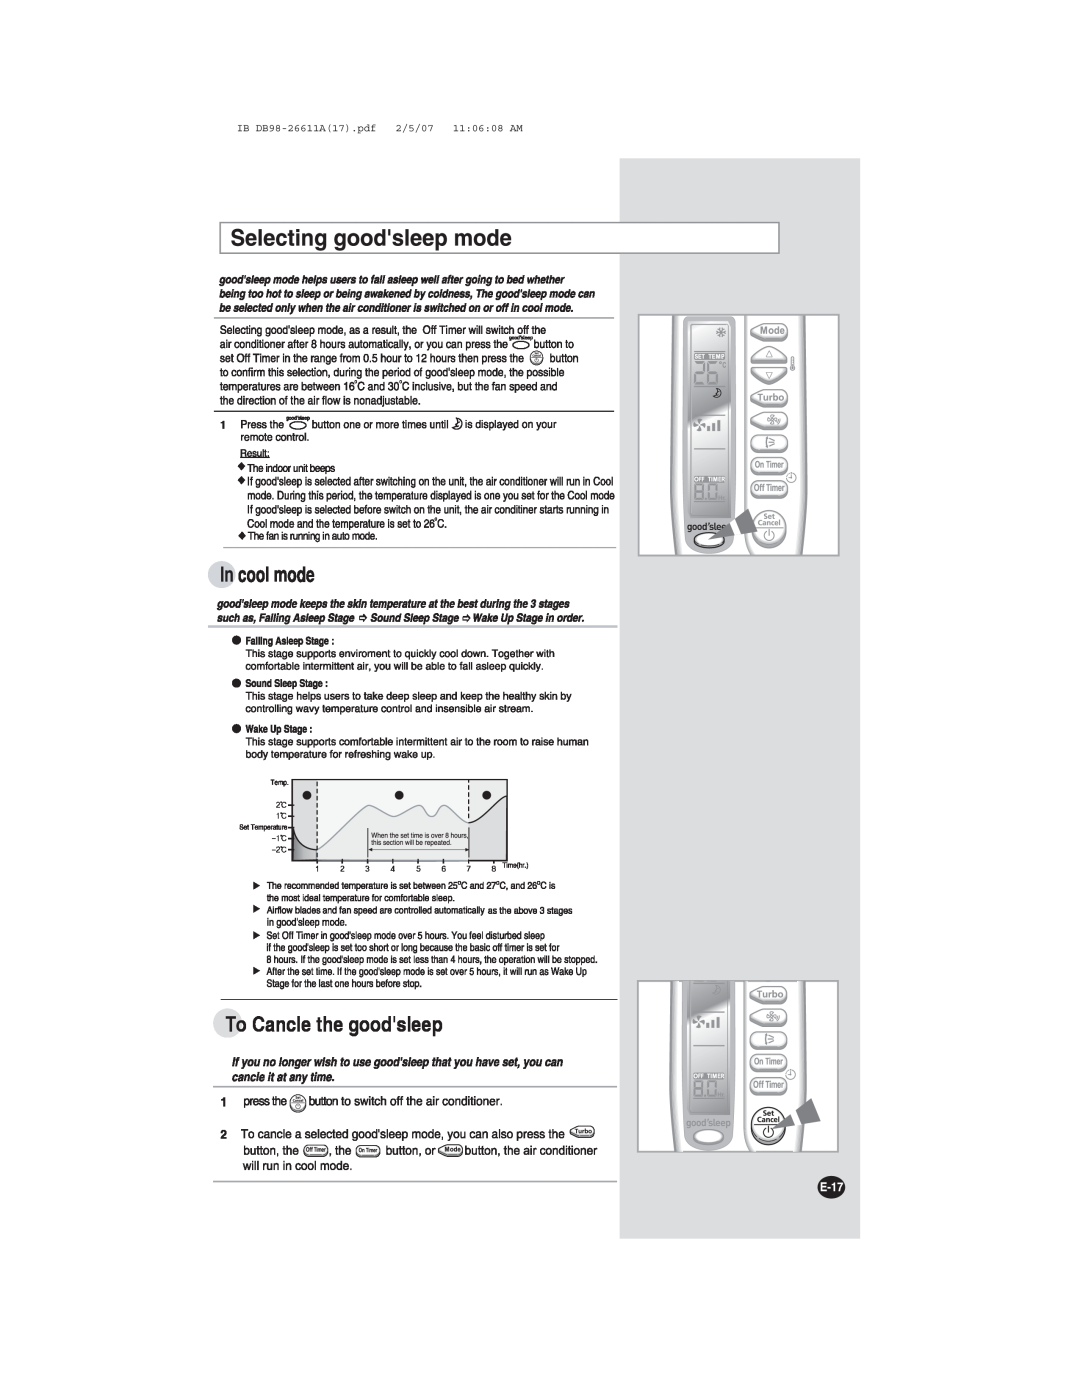 Samsung AS24FCNUMG, AS24FCXMID, AS18FCMID, AS24FCNMID manual To Cancle the goodsleep, IB DB98-26611A17.pdf 2/5/07 110608 AM 